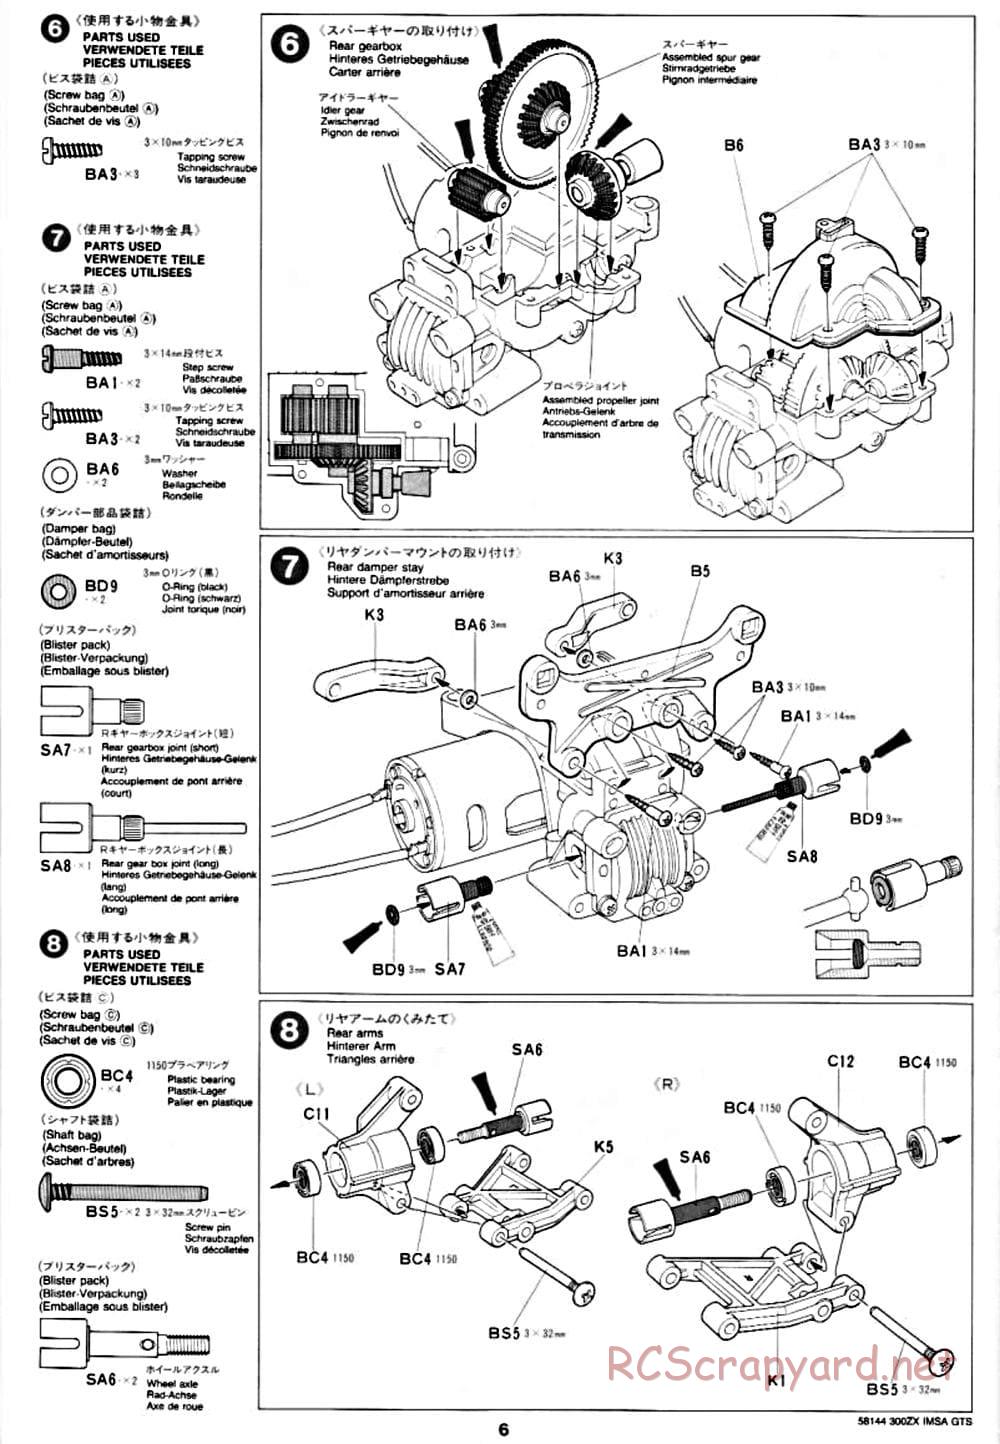 Tamiya - Nissan 300ZX IMSA-GTS - TA-02W Chassis - Manual - Page 6